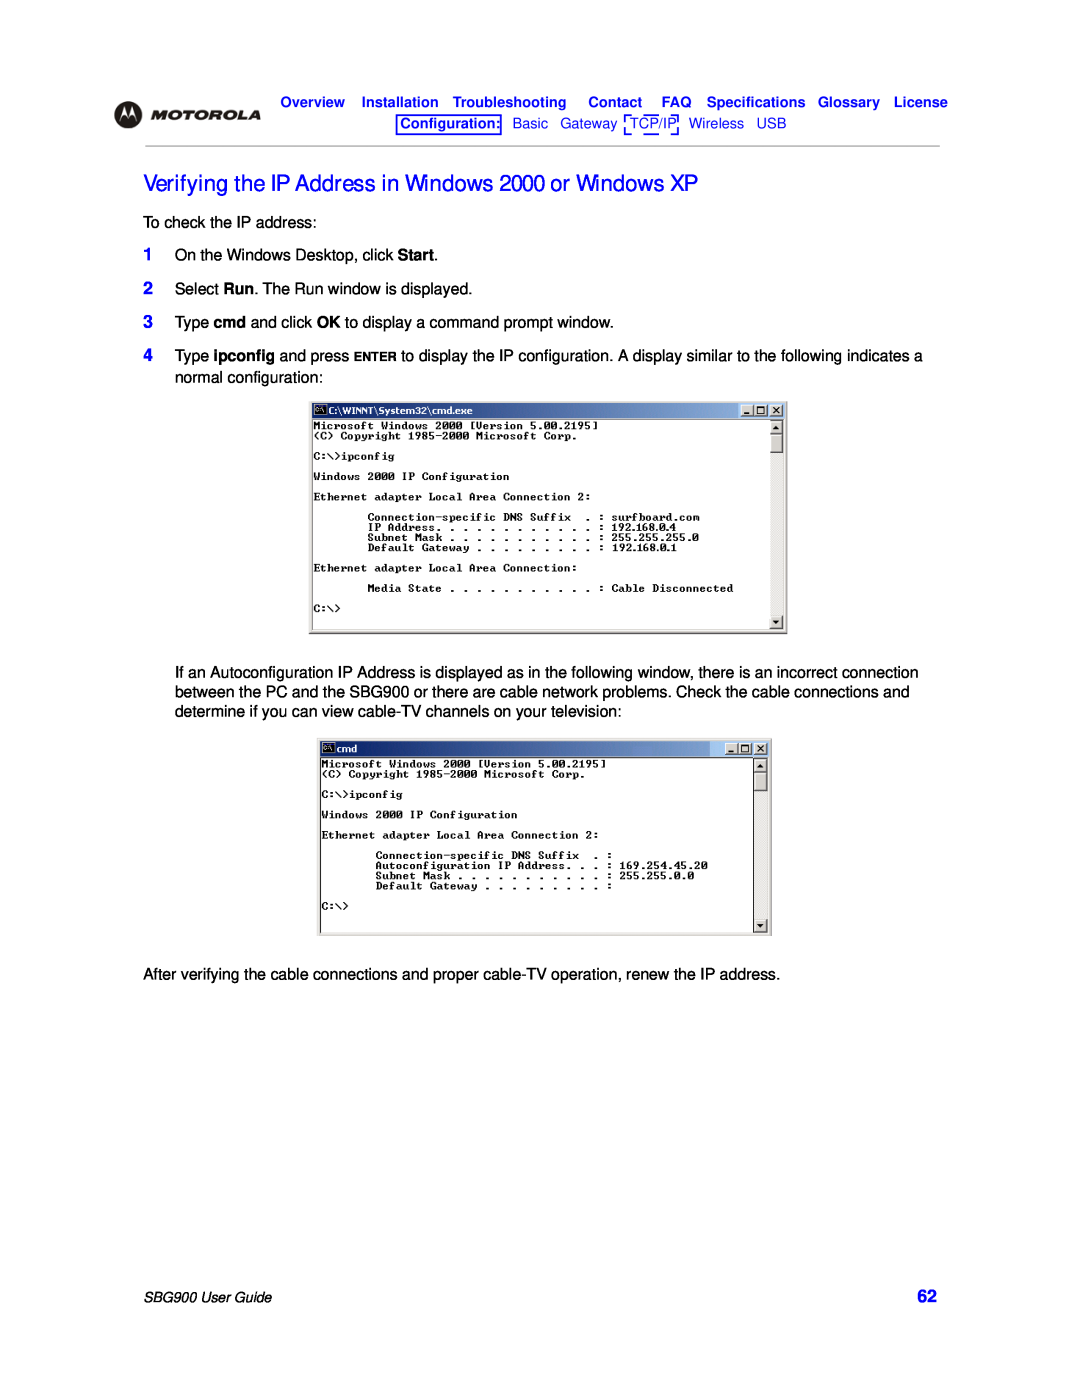 Motorola SBG900 manual Verifying the IP Address in Windows 2000 or Windows XP 